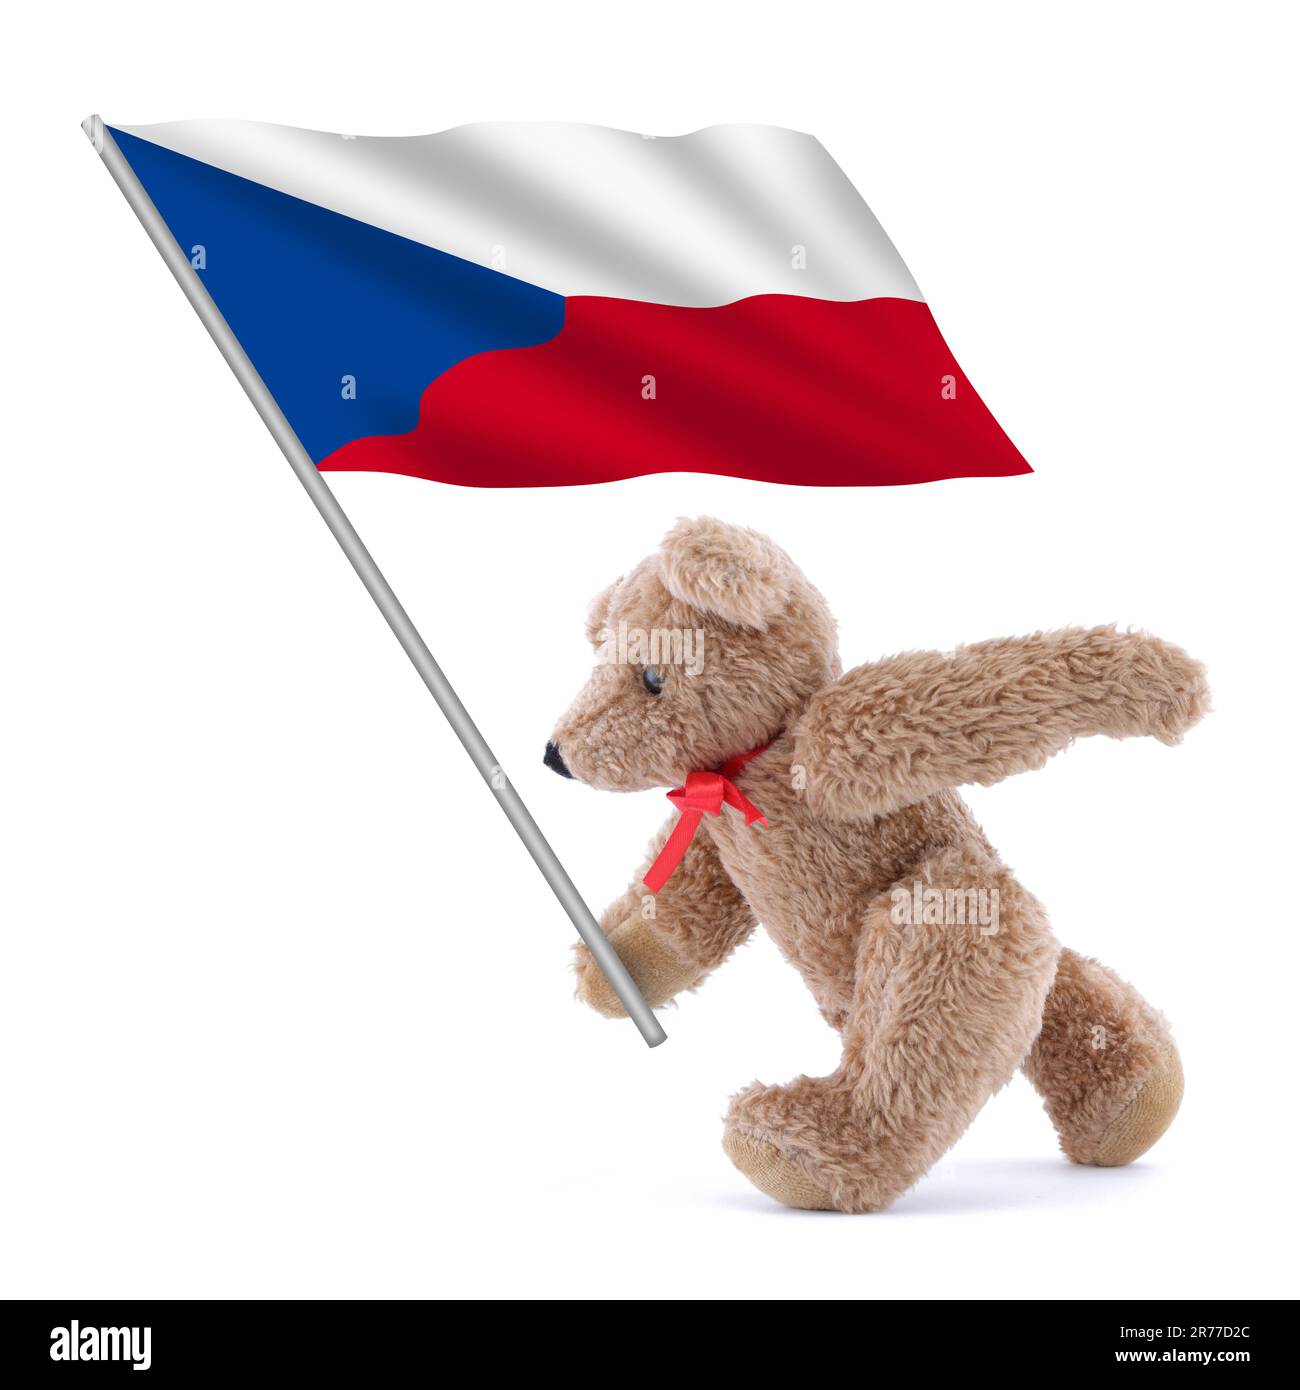 Czech flag being carried by a cute teddy bear Stock Photo